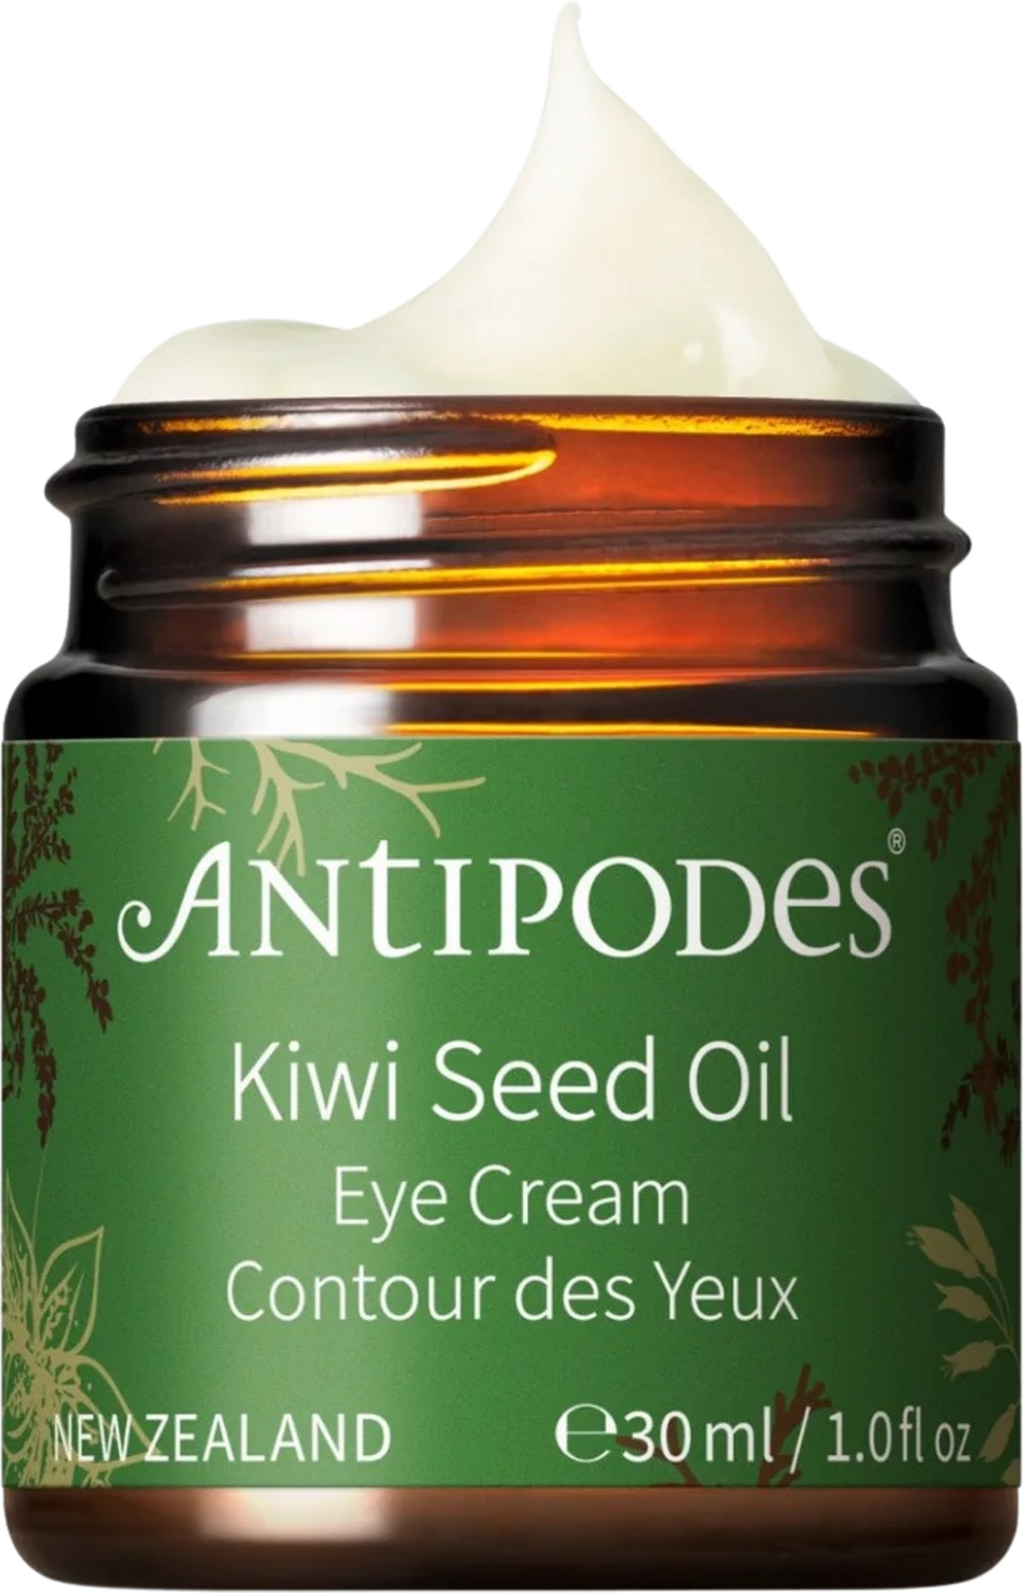 Antipodes Kiwi Seed Oil Eye Cream, 30 ml - Ecco Verde Online Shop